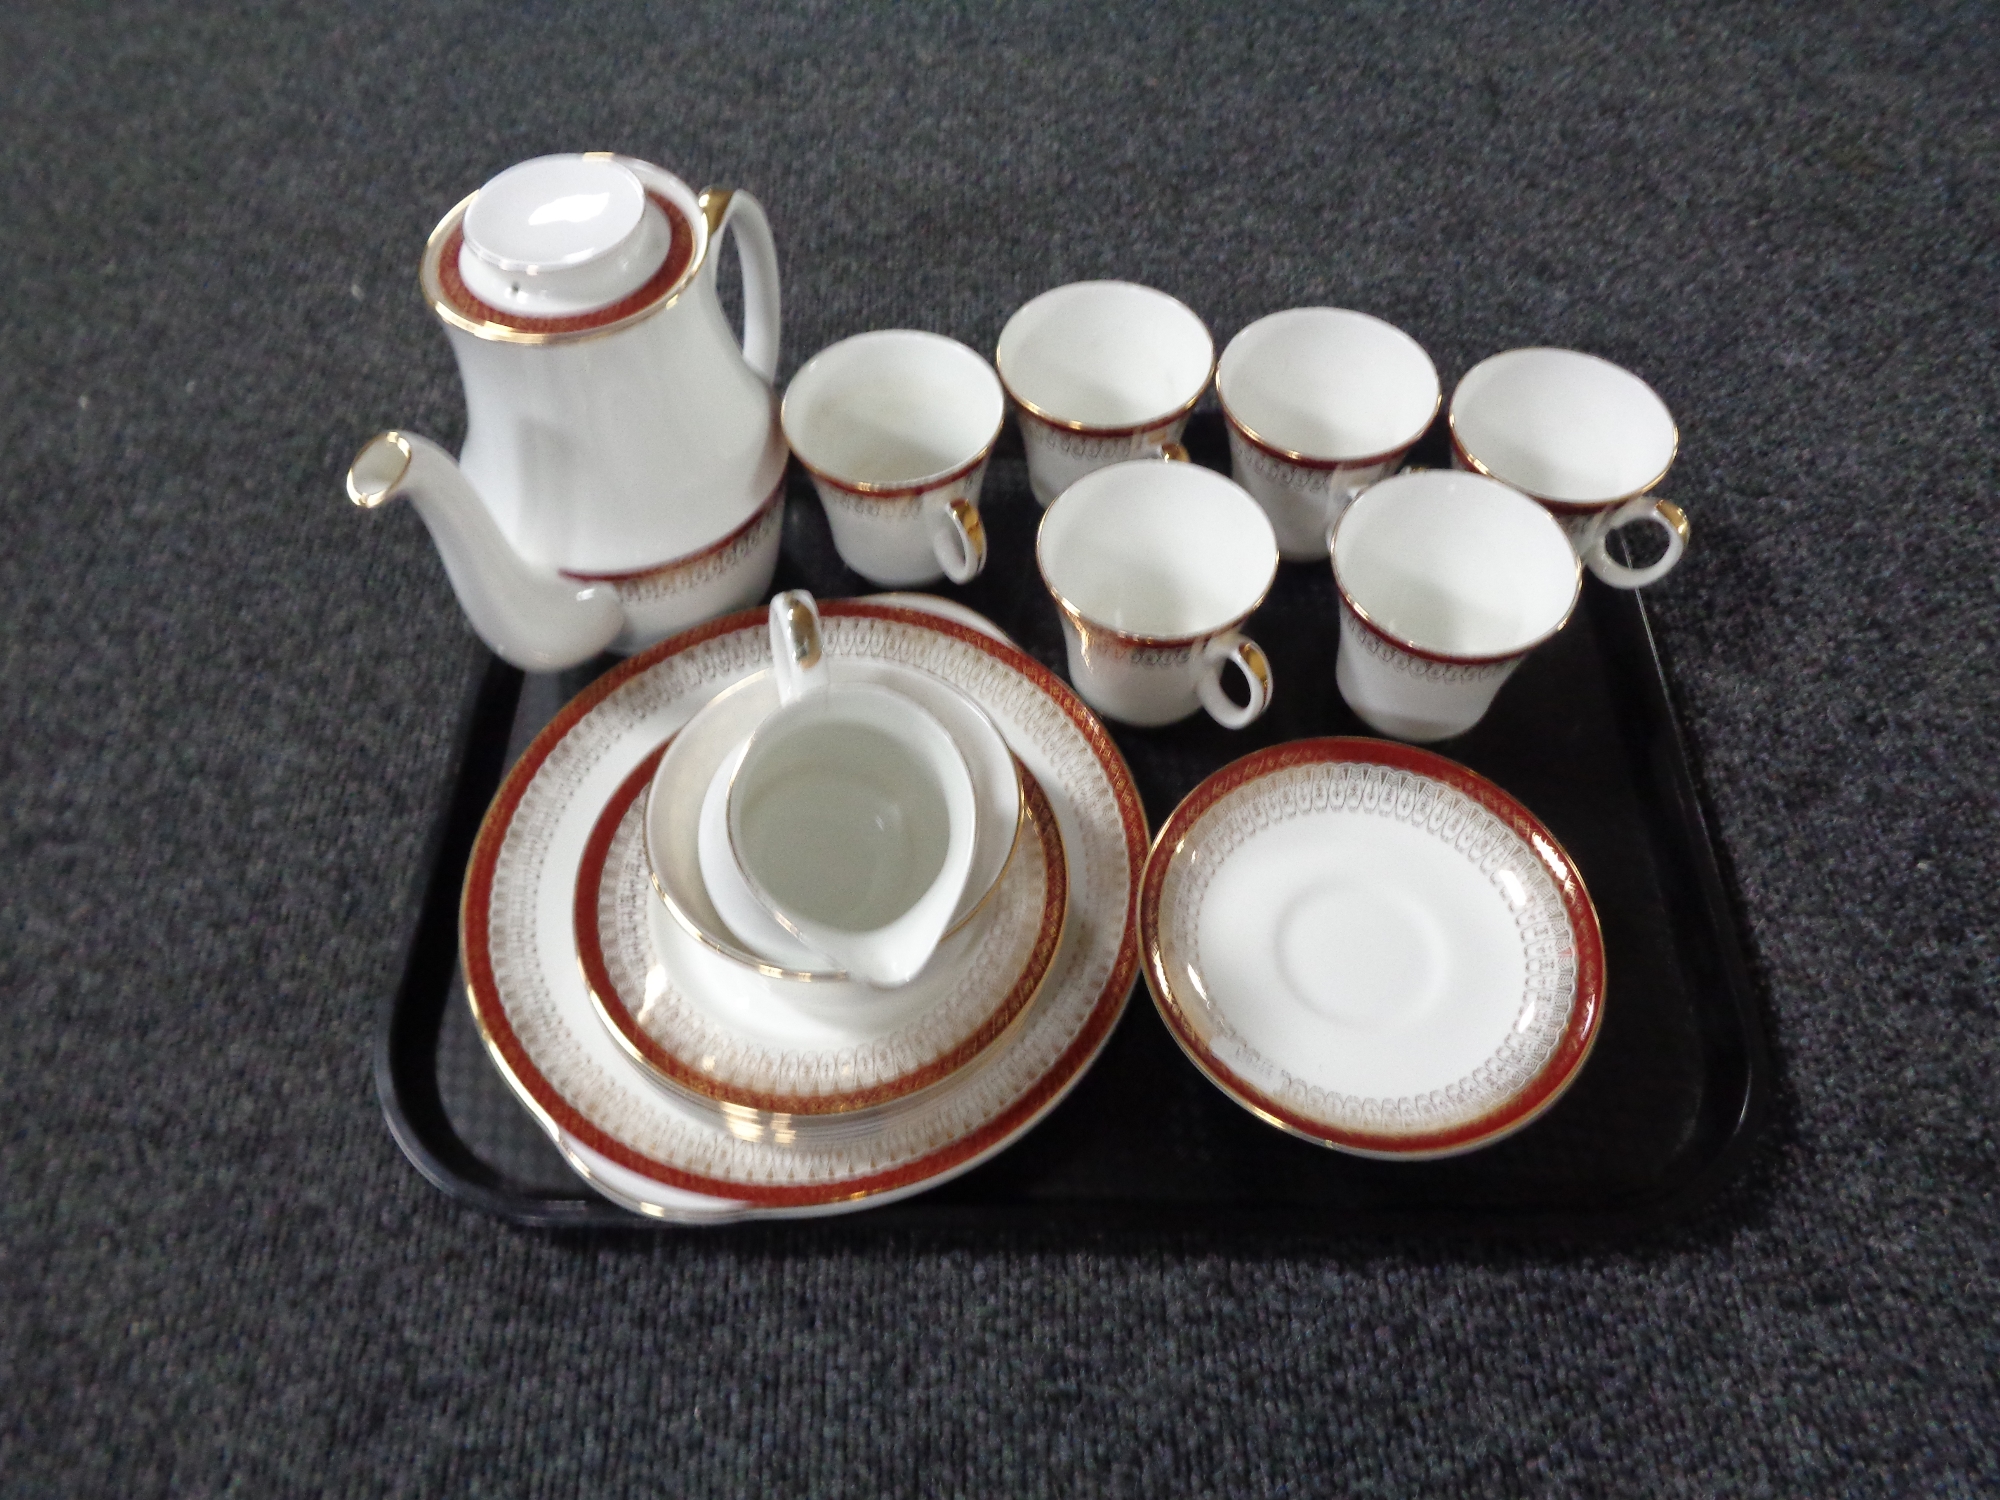 A tray containing a 21 piece Royal Grafton Majestic tea service.